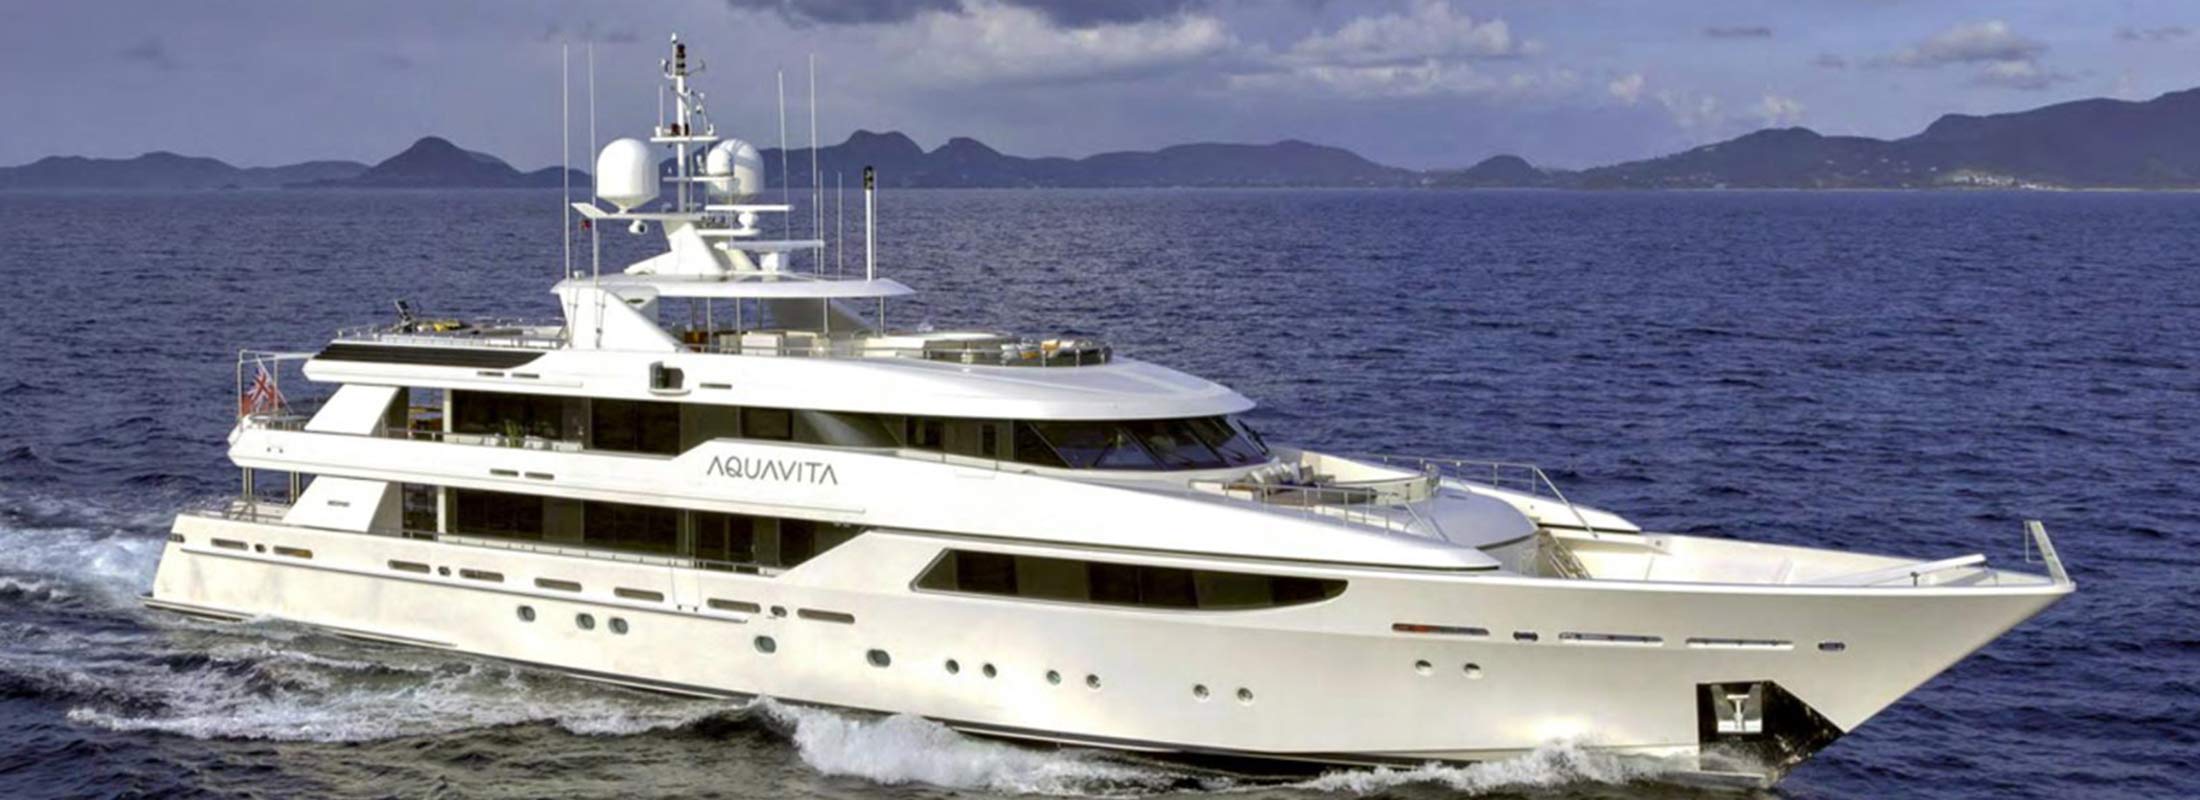 Aquavita Motor Yacht for Charter Caribbean Sea slider 1